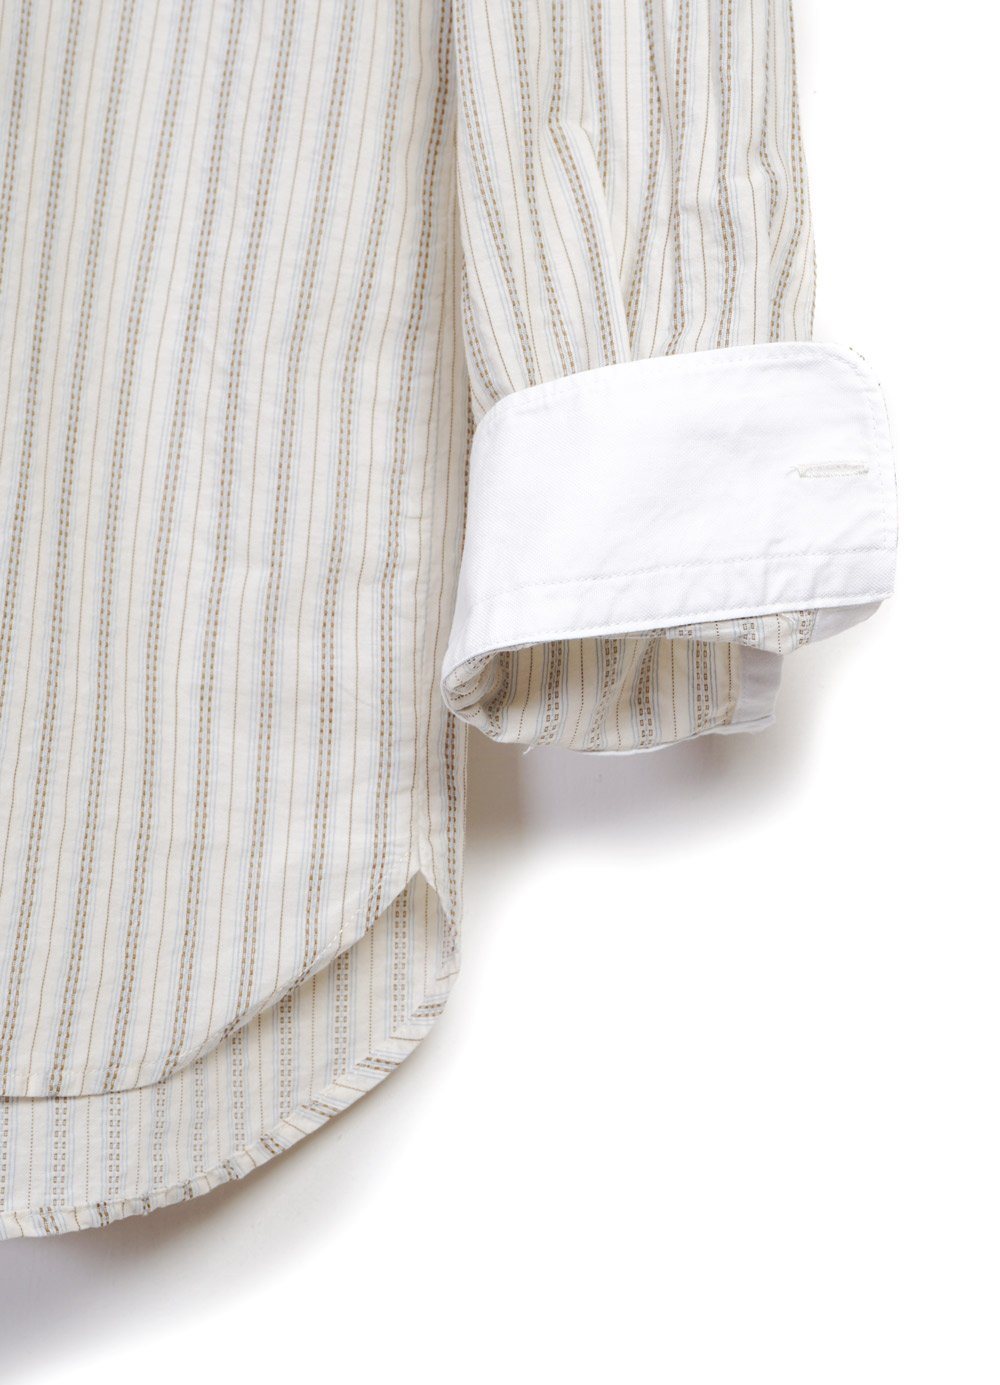 HANSEN GARMENTS - HAAKON | White Collar Striped Shirt | Jacquard - HANSEN Garments